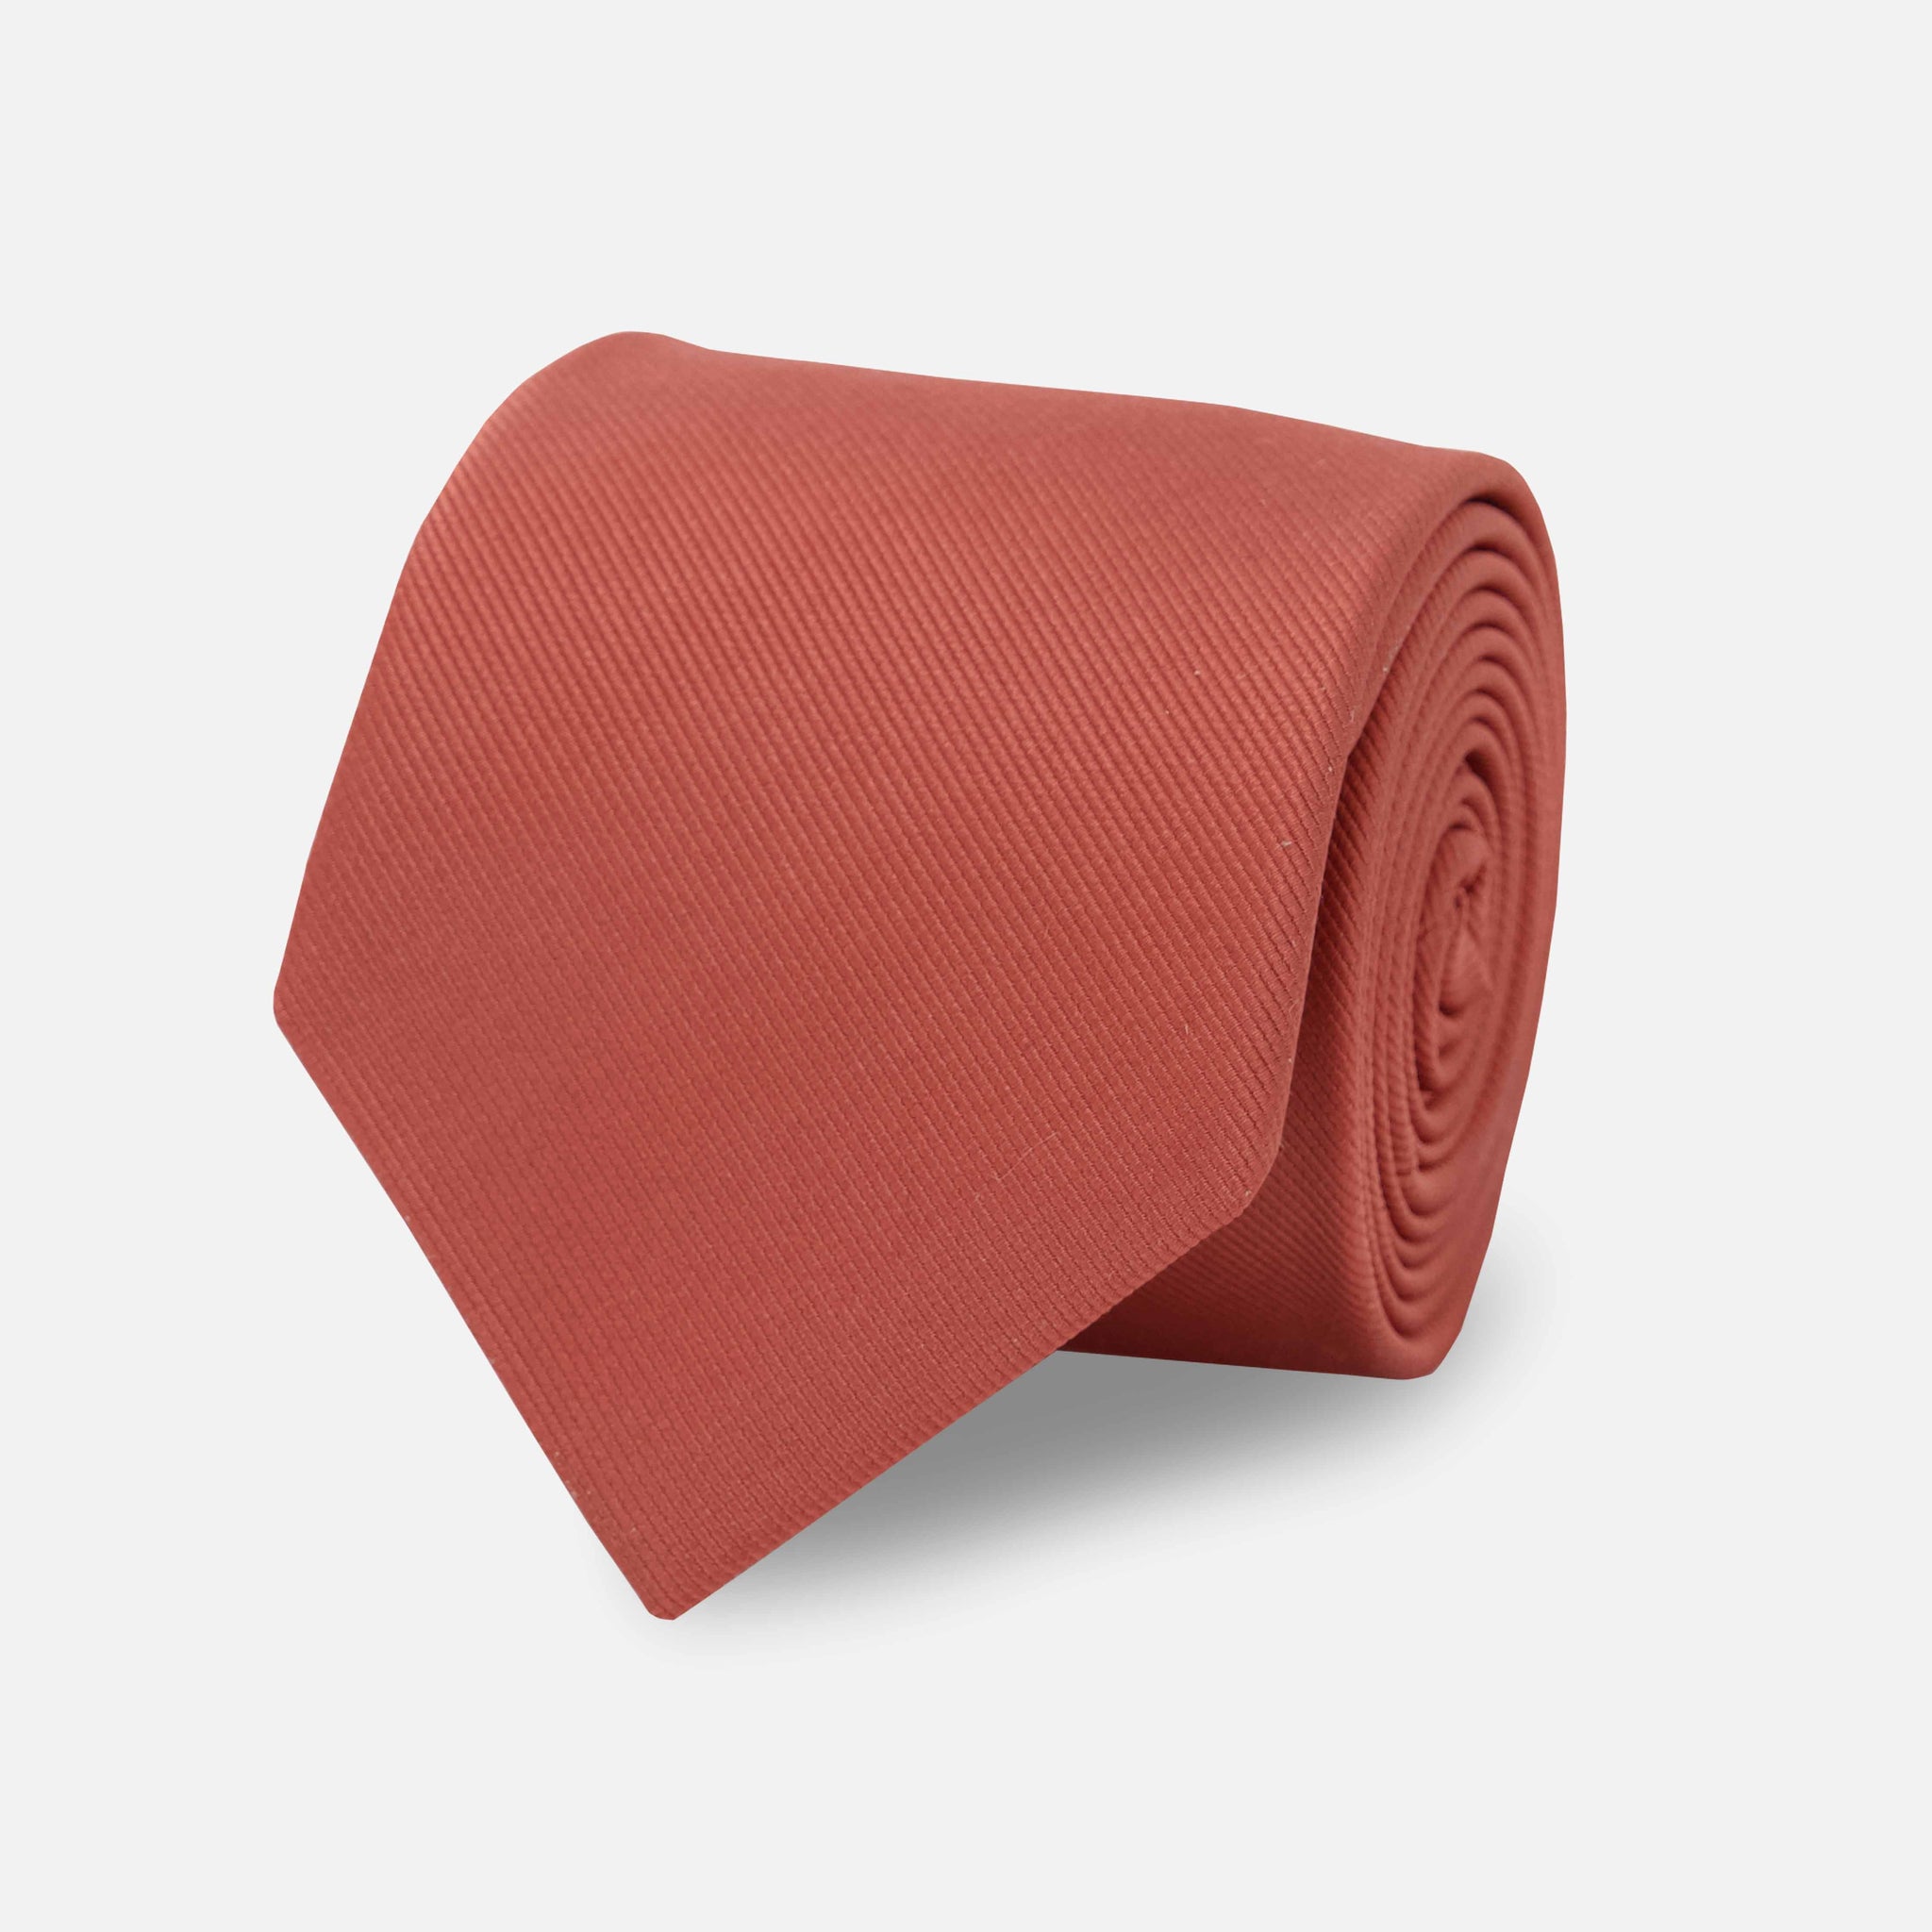 Grosgrain Solid Terracotta Tie by Tie Bar